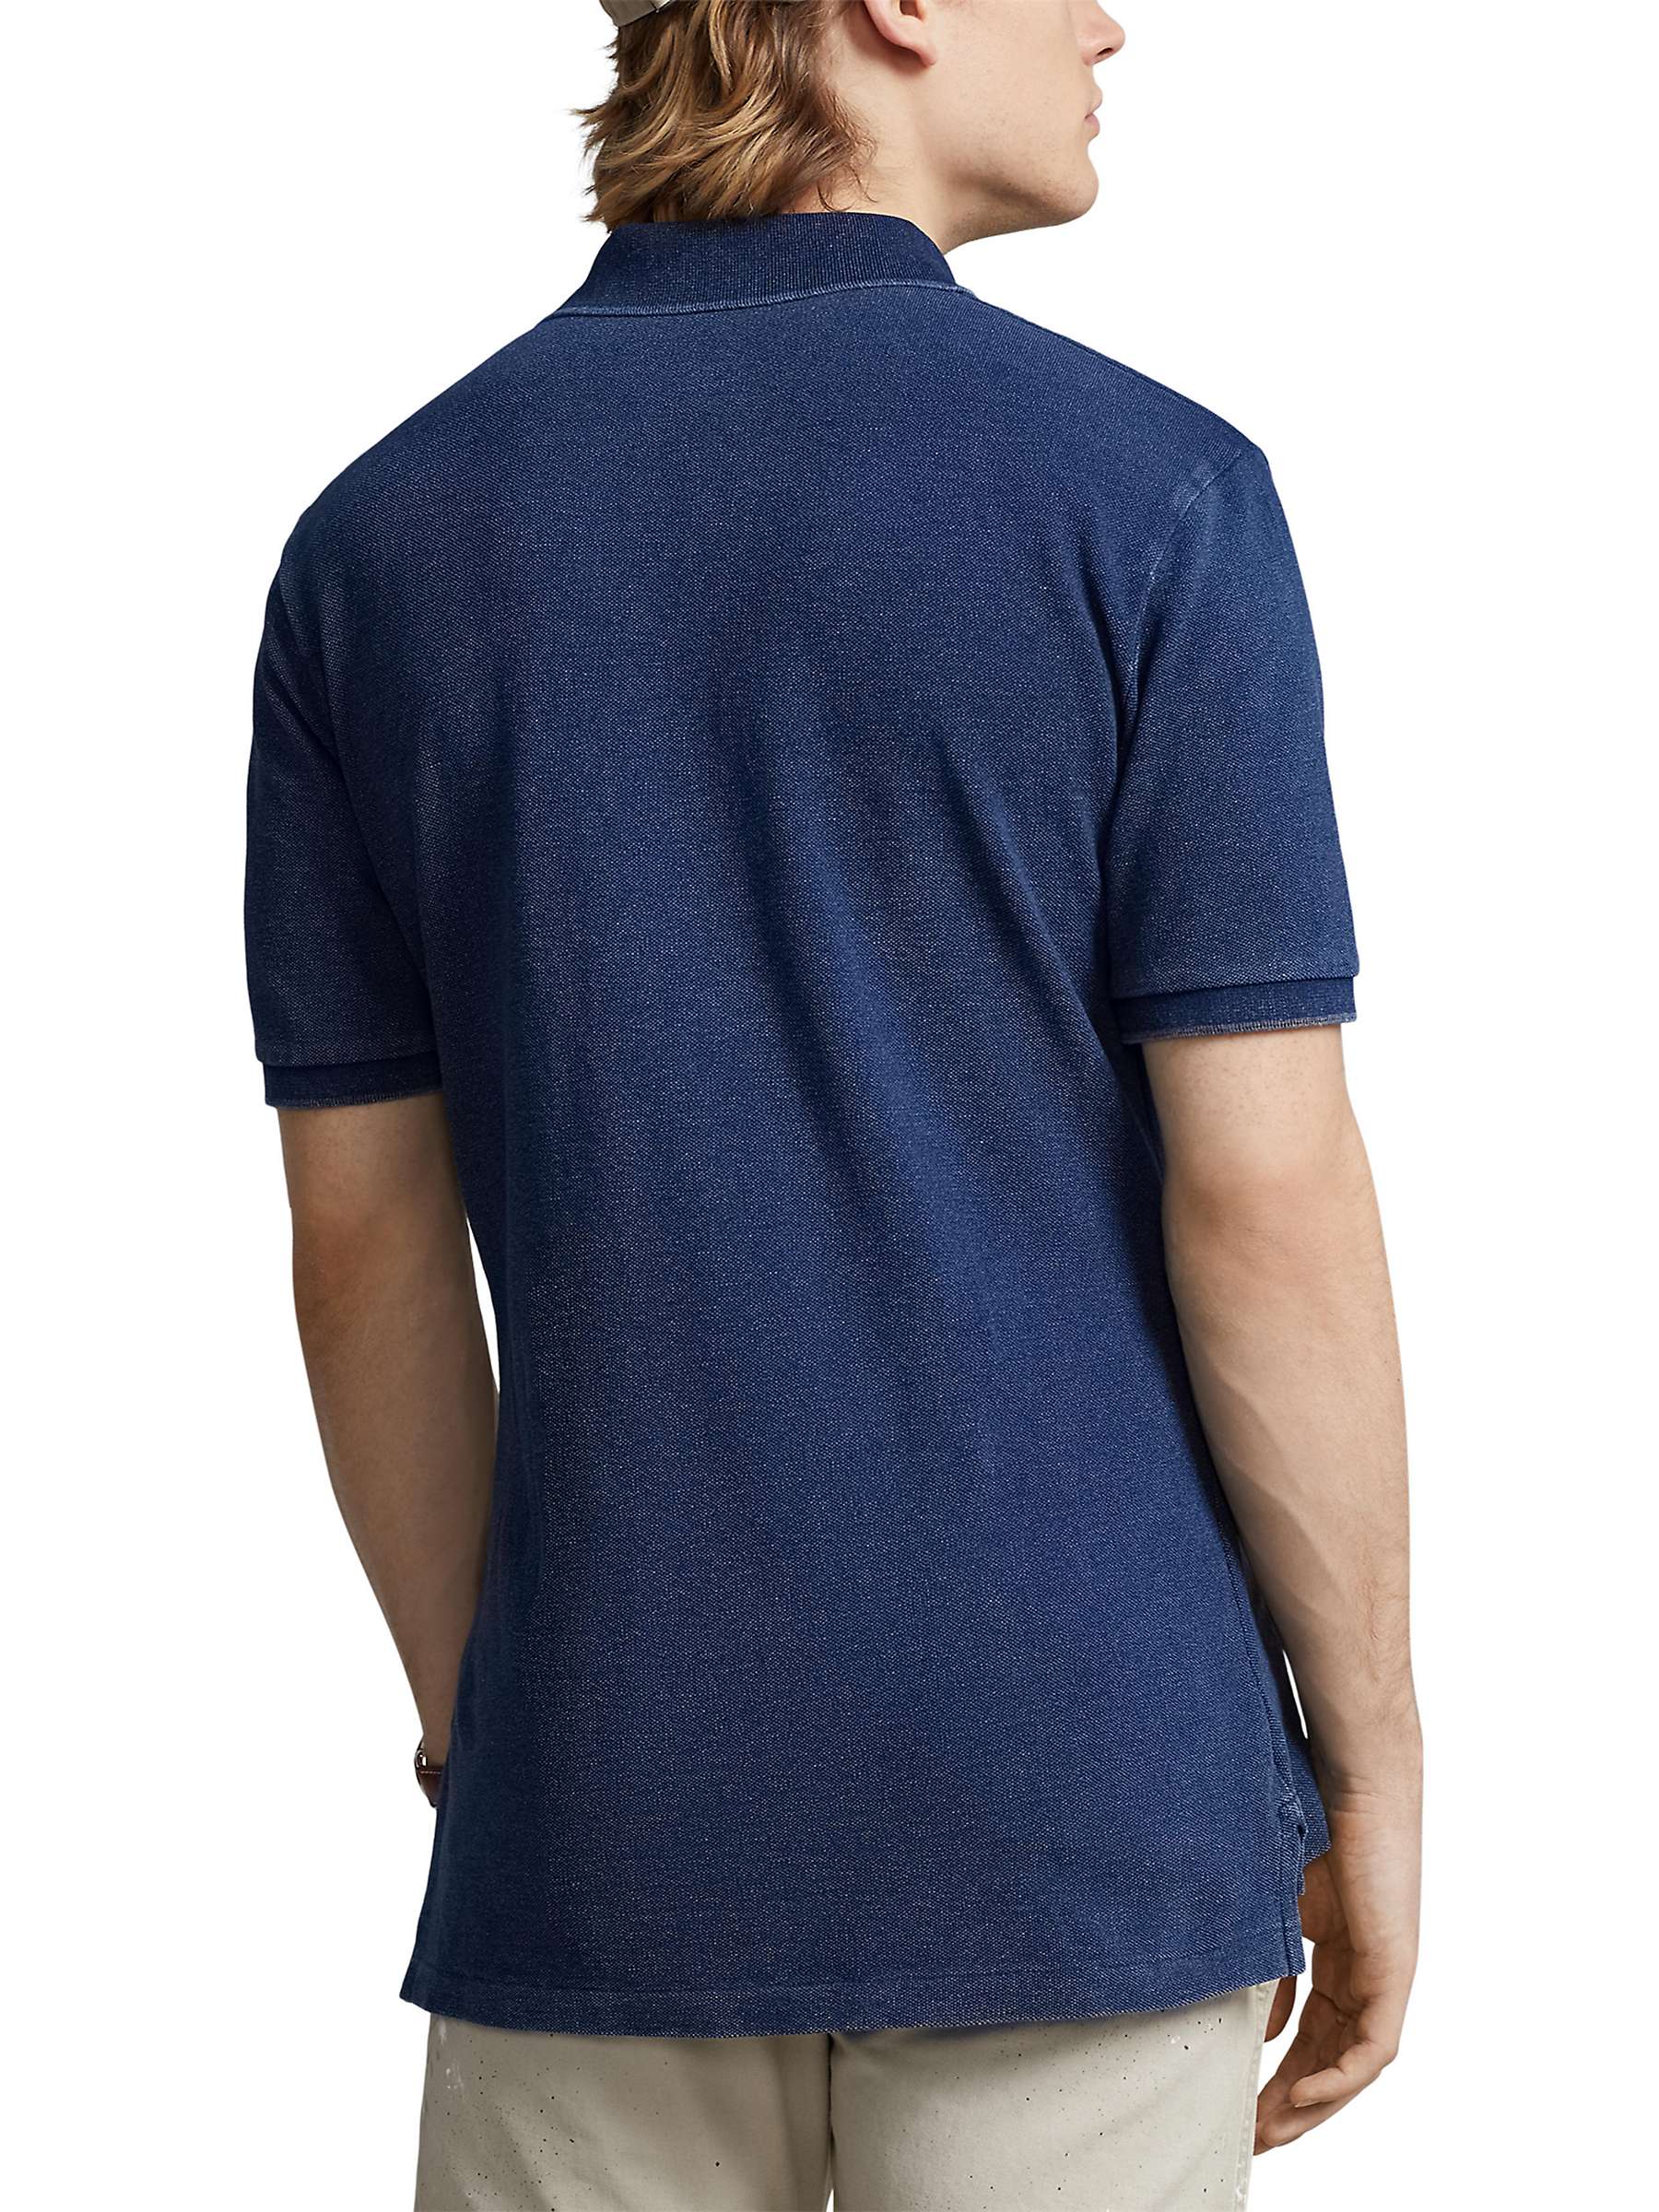 Buy Polo Ralph Lauren Slim Fit Short Sleeve Polo Shirt, Dark Indigo Online at johnlewis.com